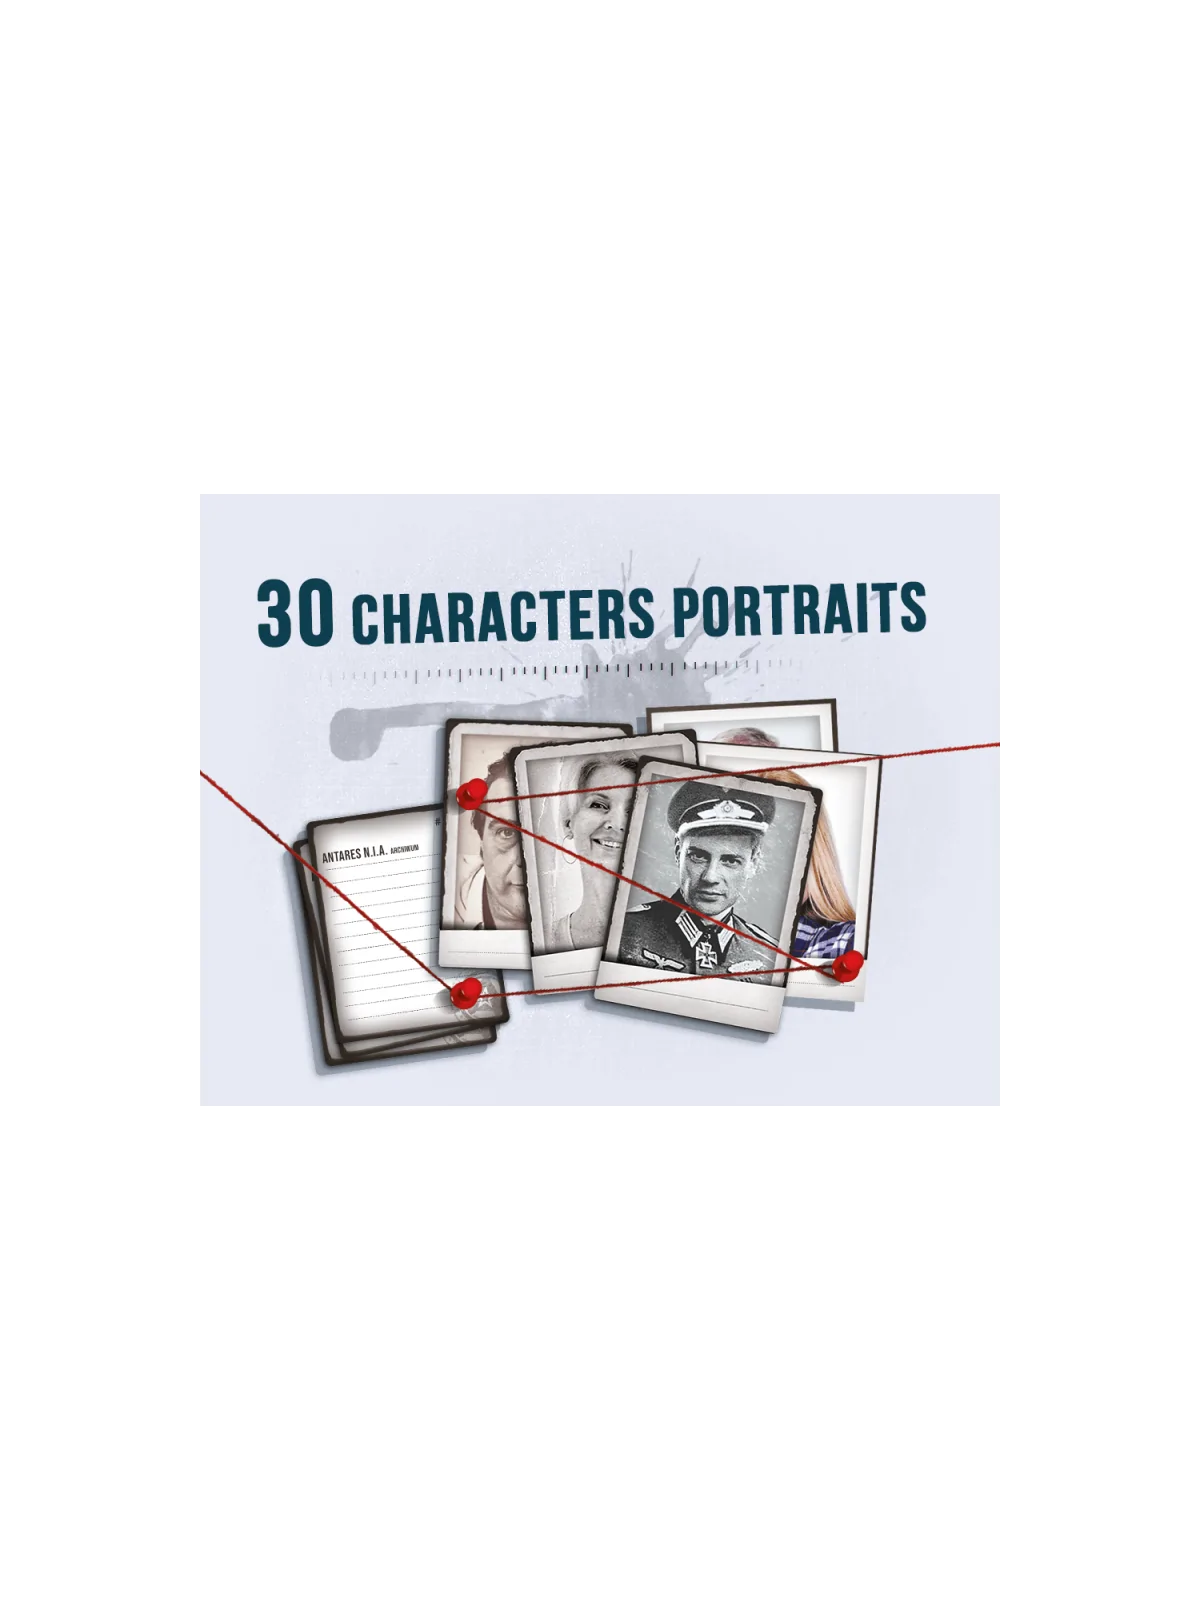 Comprar Detective: 30 Character Portraits - Mini Expansión barato al m